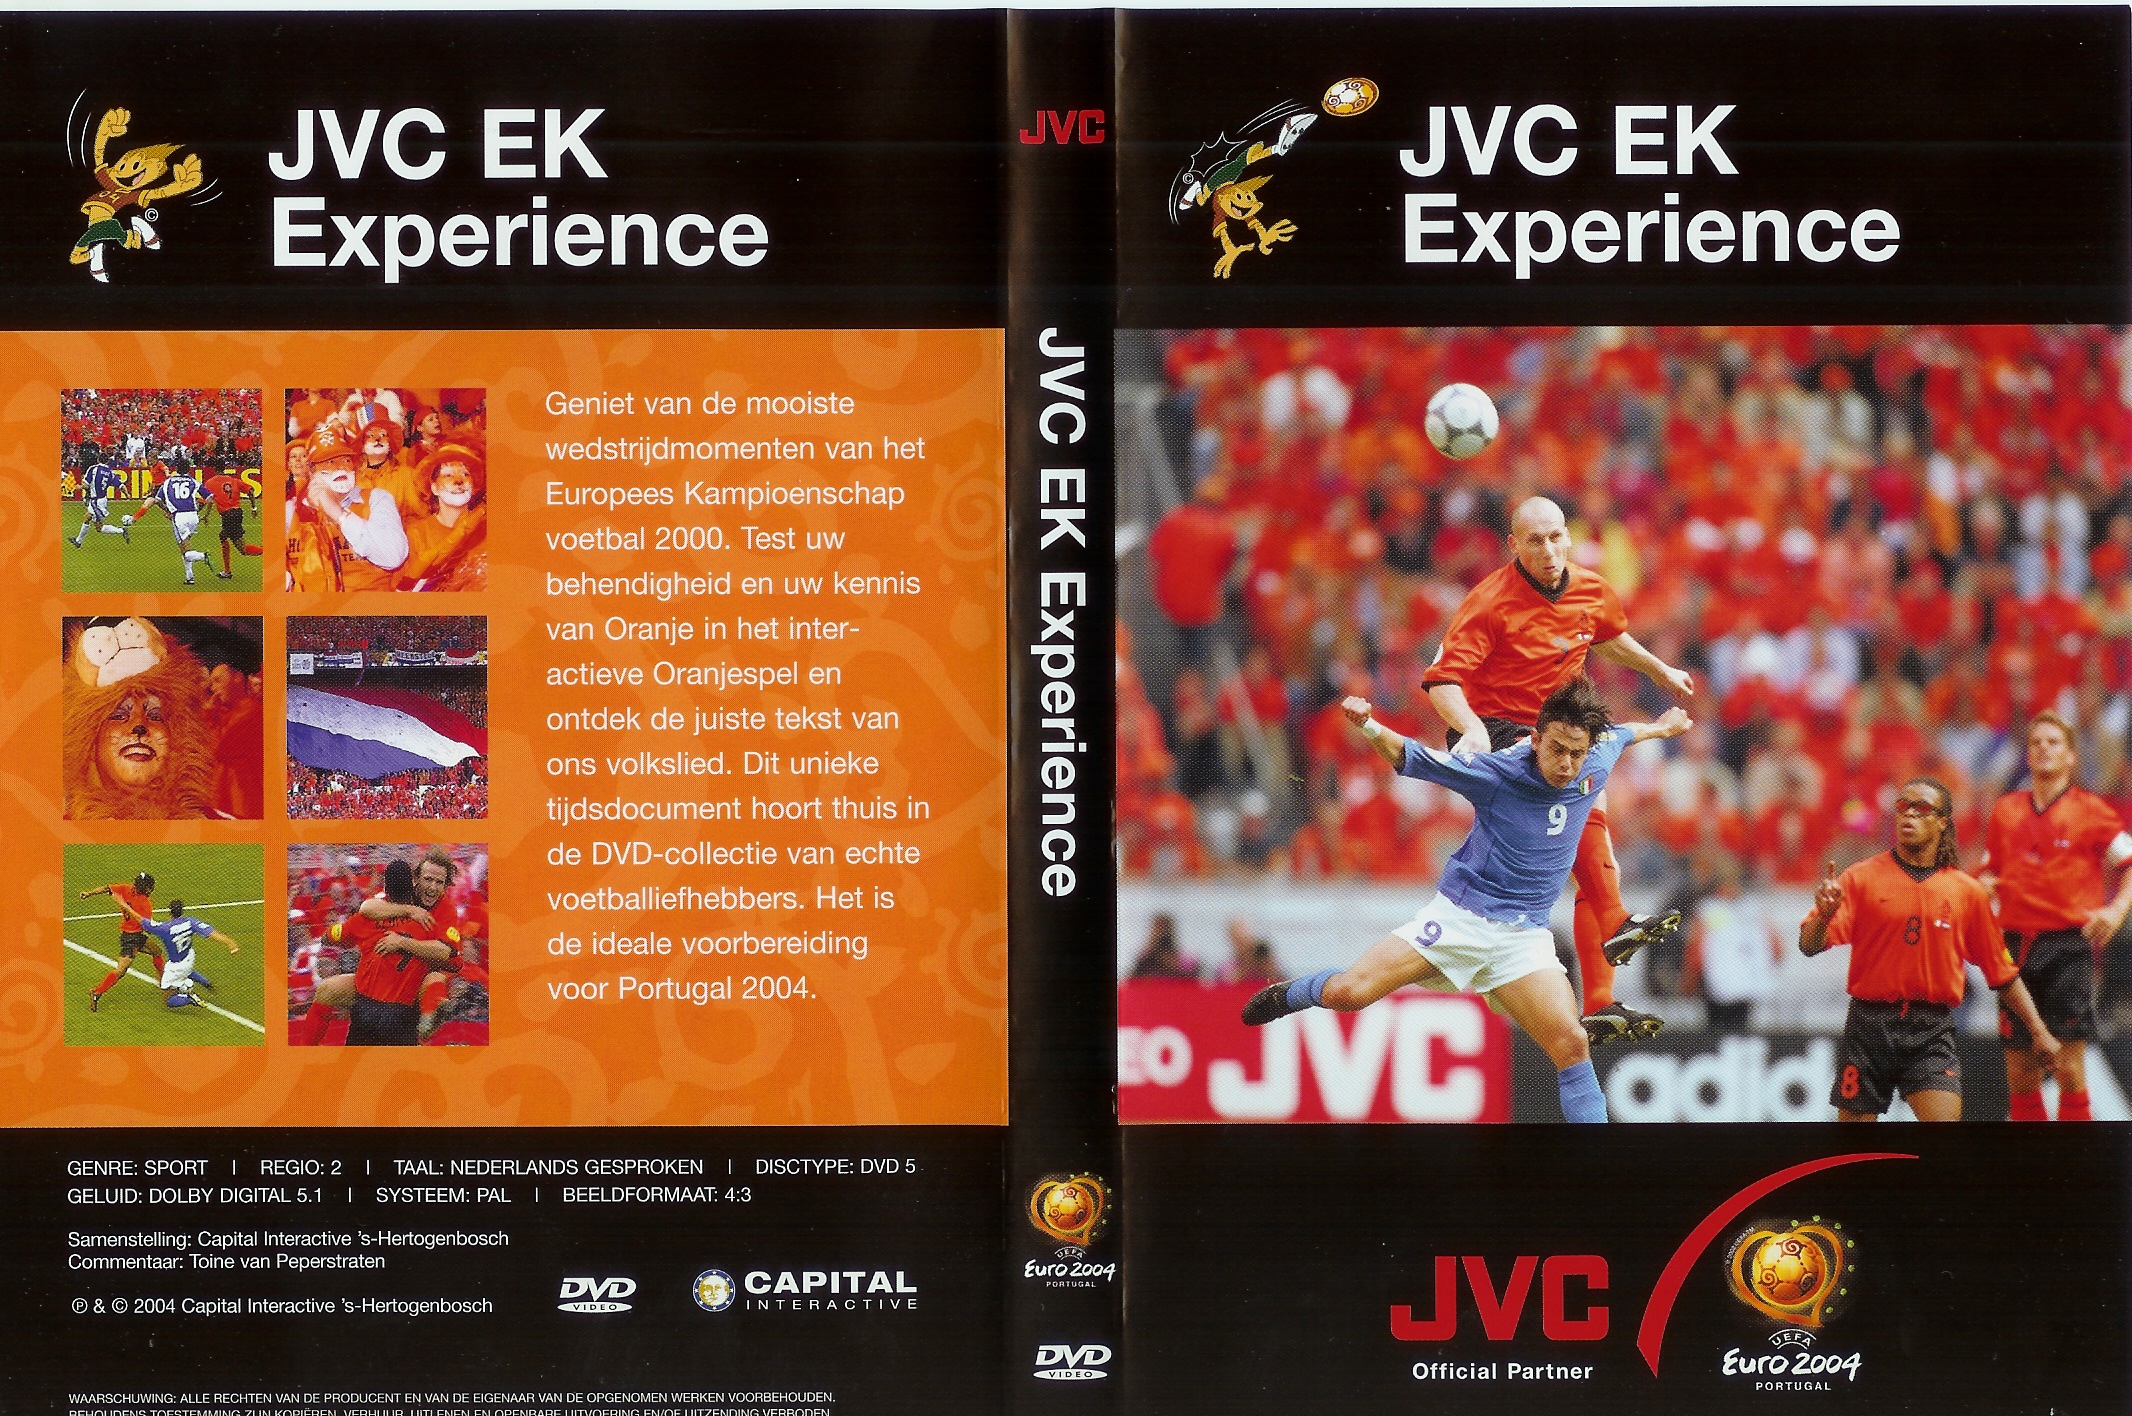 Jaquette DVD JVC EK experience